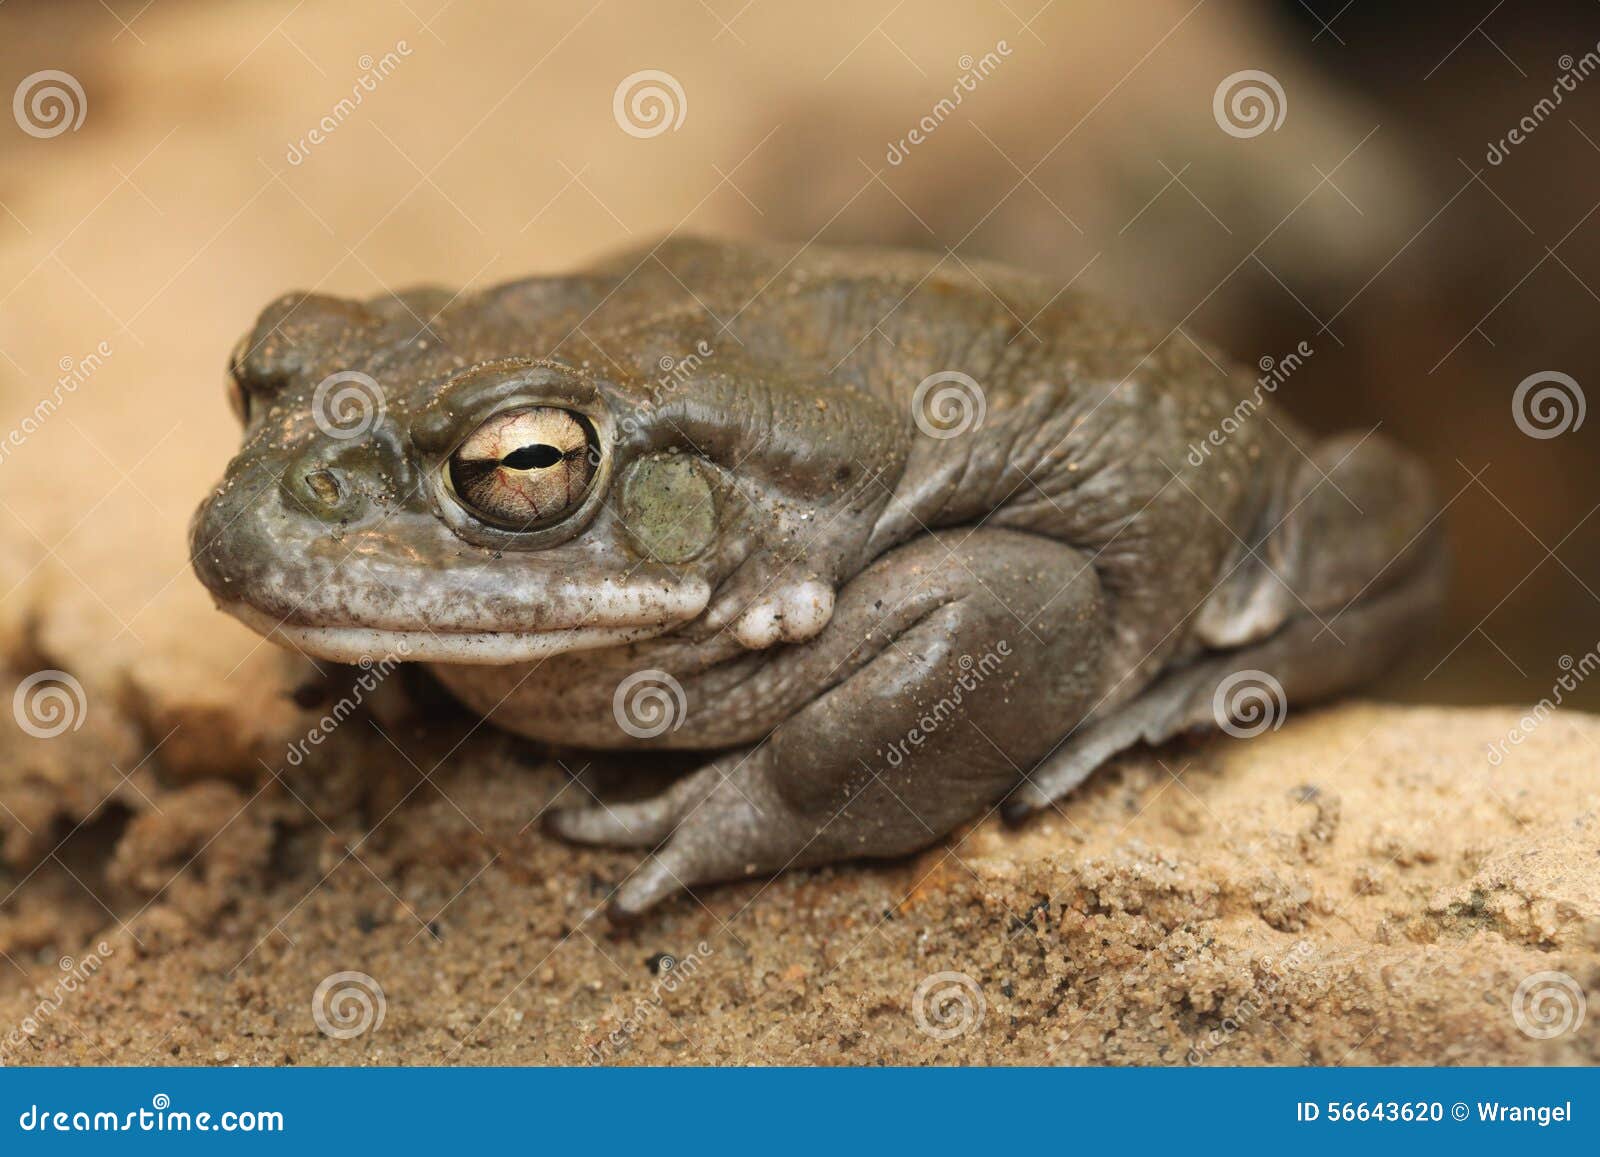 colorado river toad (incilius alvarius).